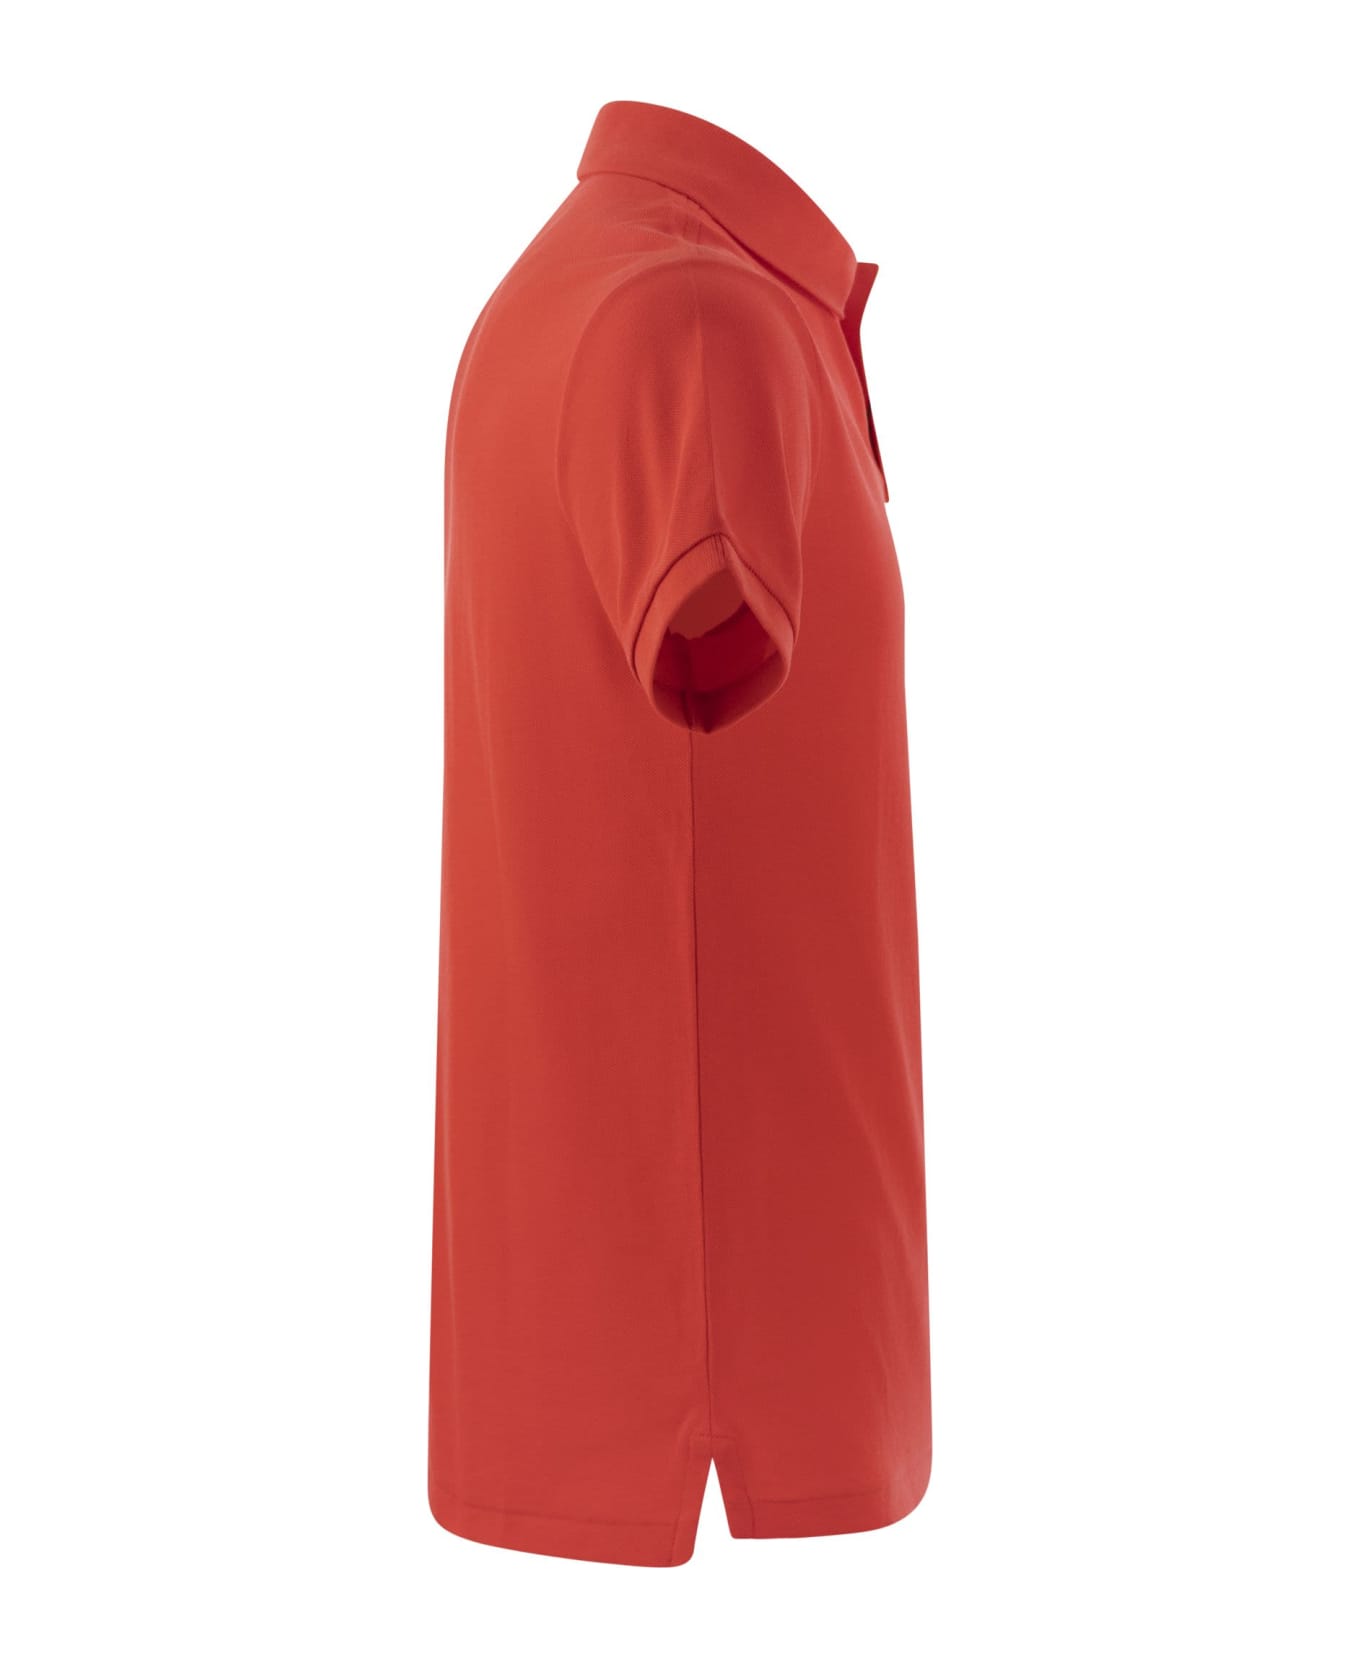 Polo Ralph Lauren Slim-fit Pique Polo Shirt - Red